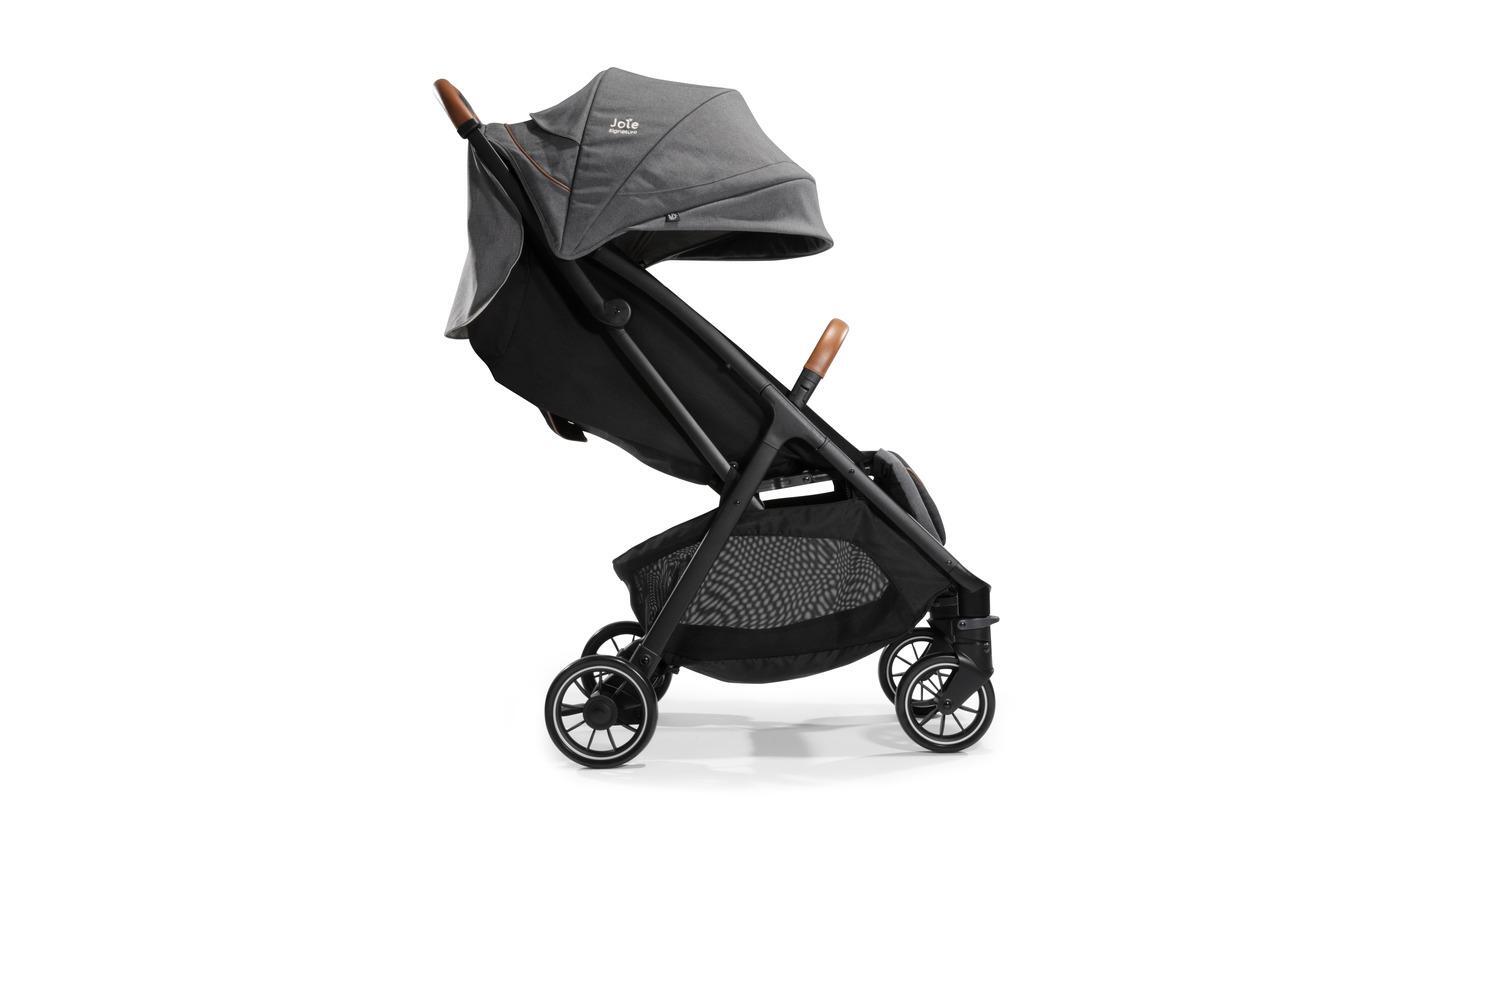 Baby Lionelo Lightweight Pram Stroller Buggy Pushchair Julie Black/Black